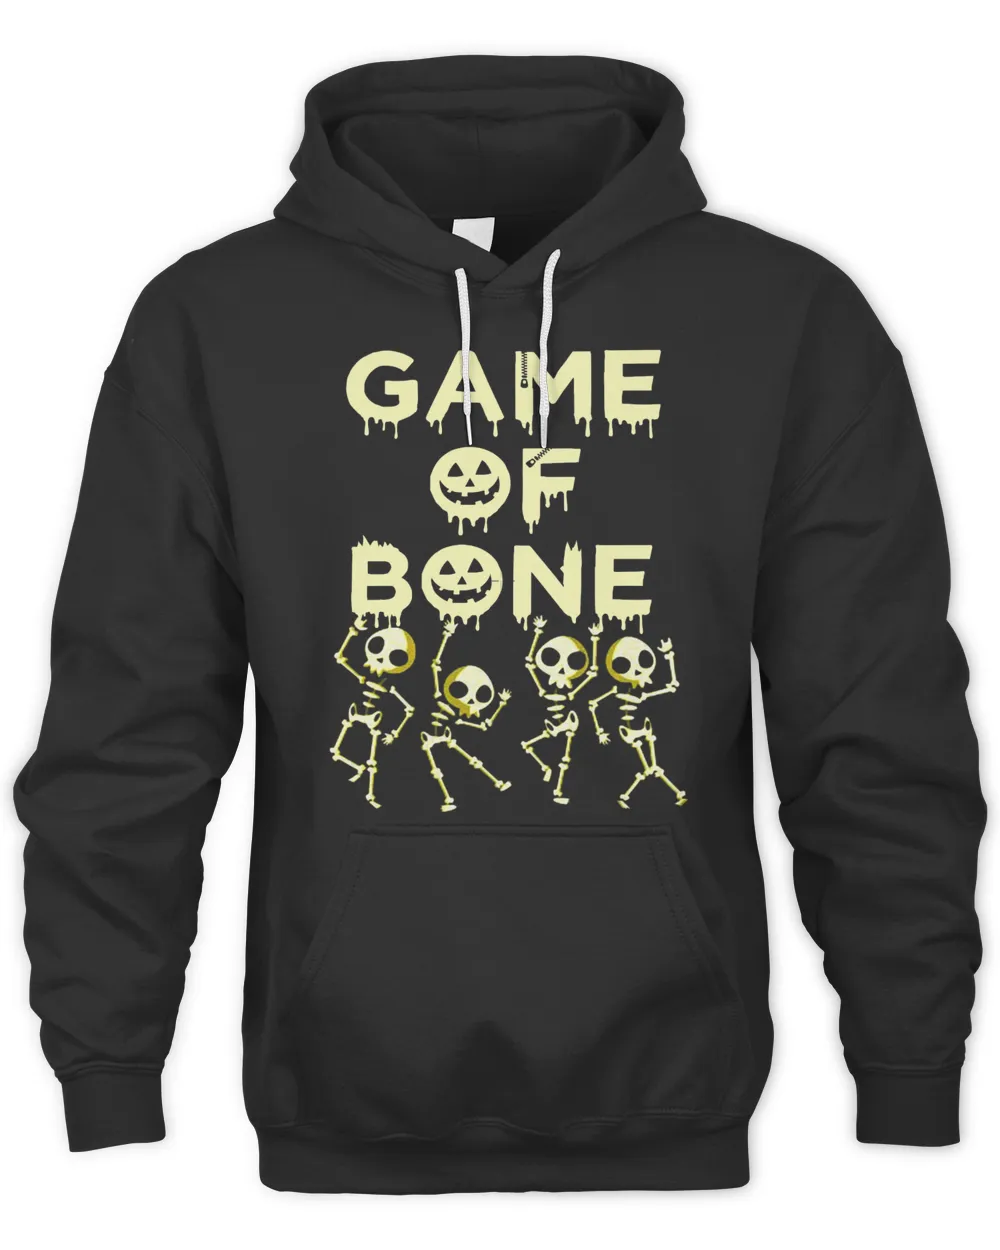 game of bone